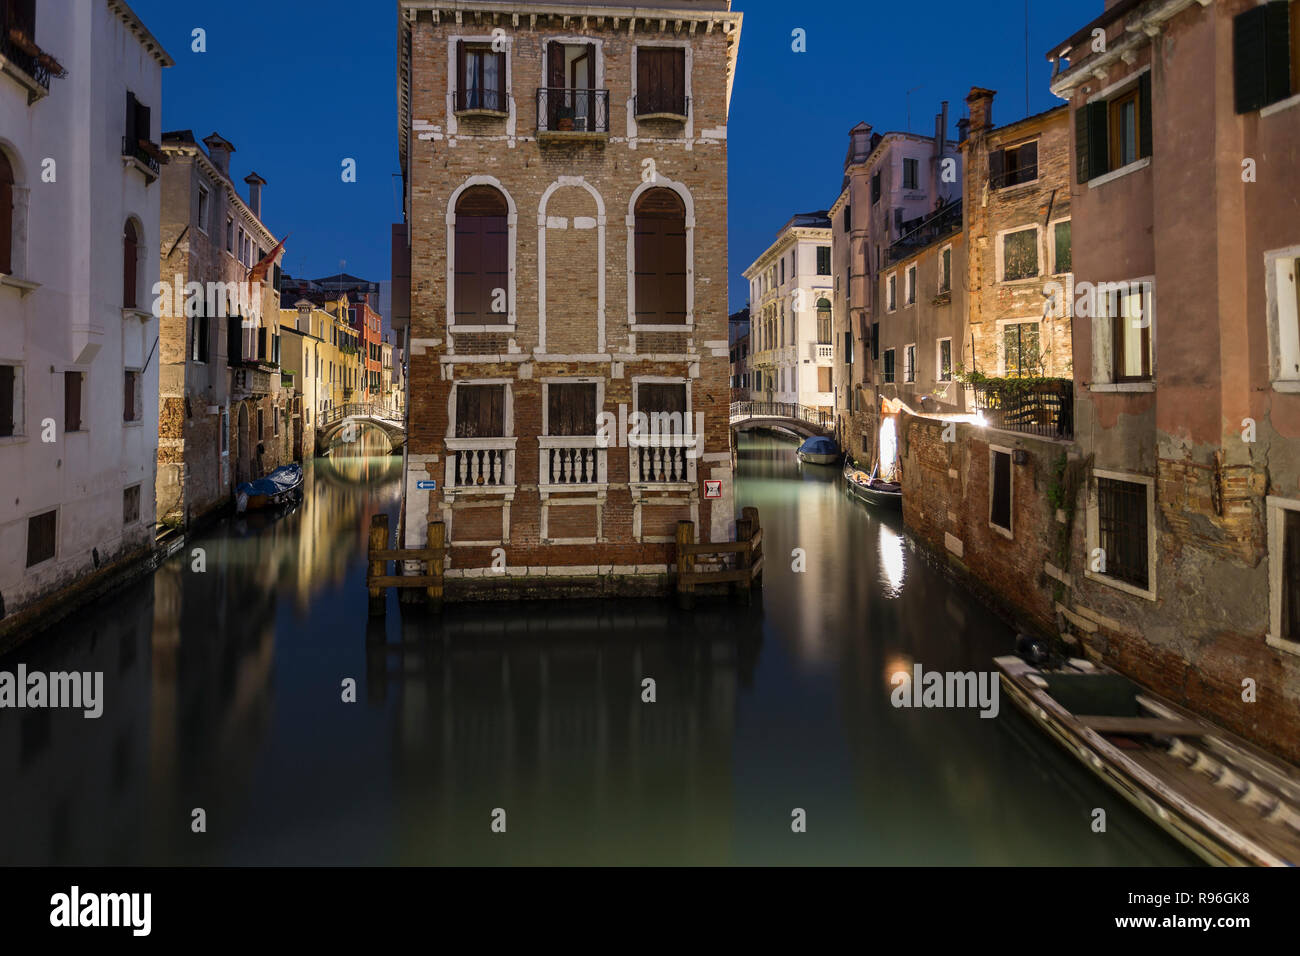 Alte Gebäude zwischen schmalen Kanäle, Venedig, Italien Stockfoto